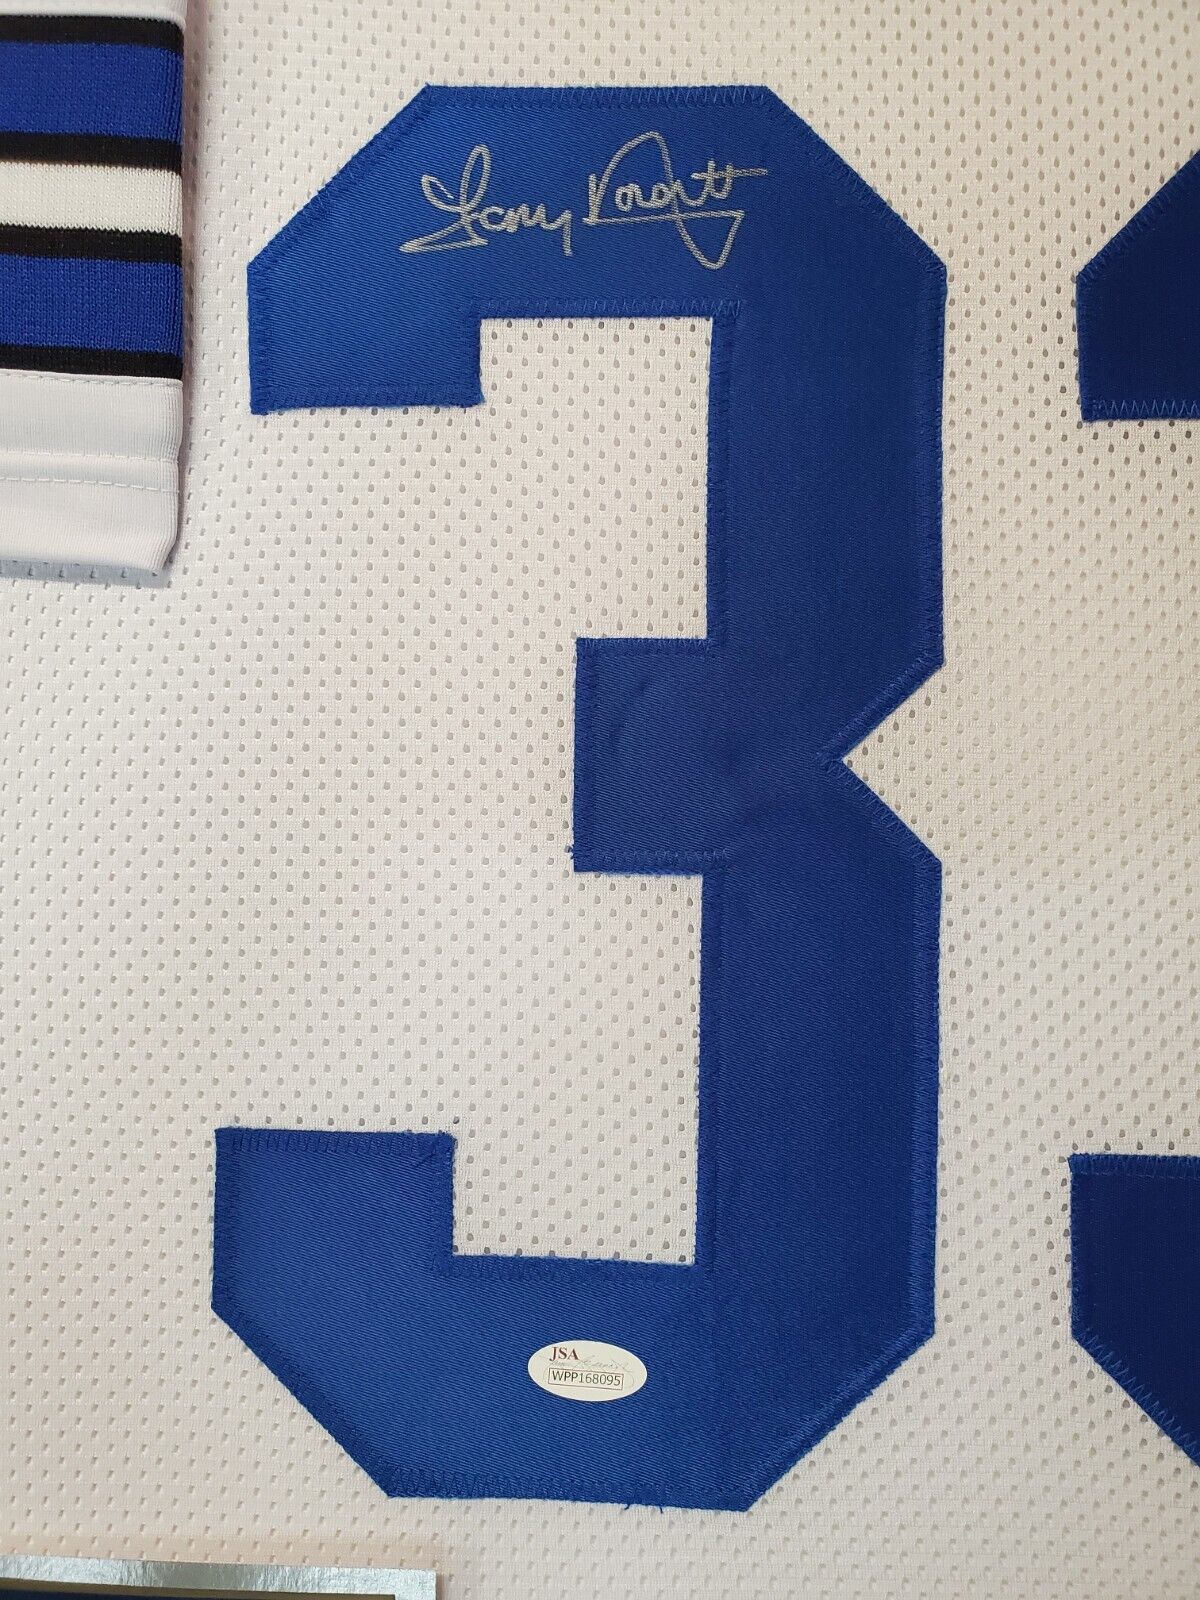 MVP Authentics Framed Dallas Cowboys Tony Dorsett Autographed Signed Jersey Jsa Coa 607.50 sports jersey framing , jersey framing